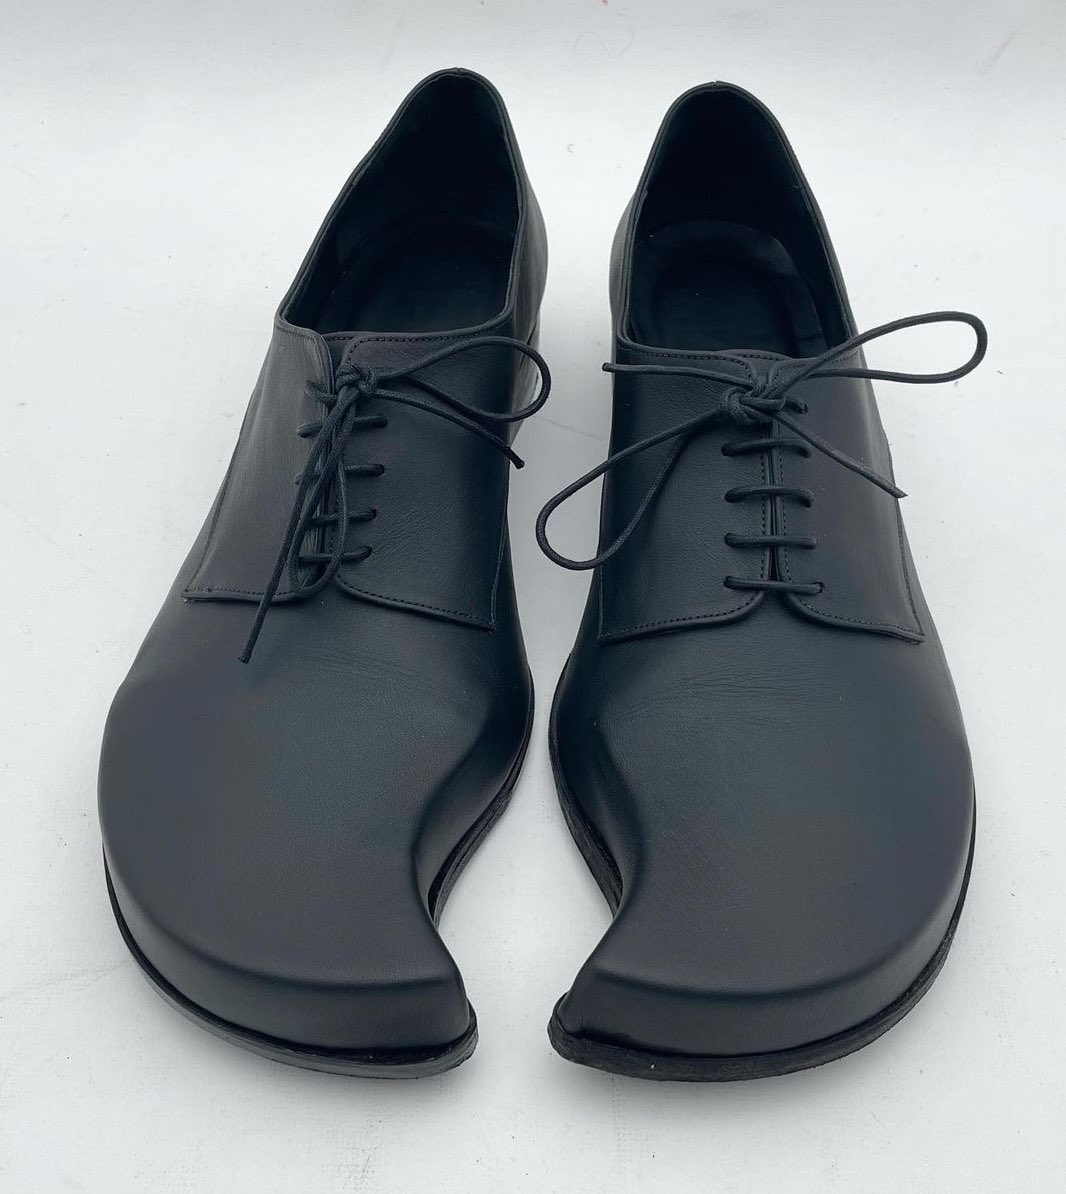 gastt Fashion в X: „The Comma Shoe by Aaron Esh. https://t.co/CondVSpie6“  / X